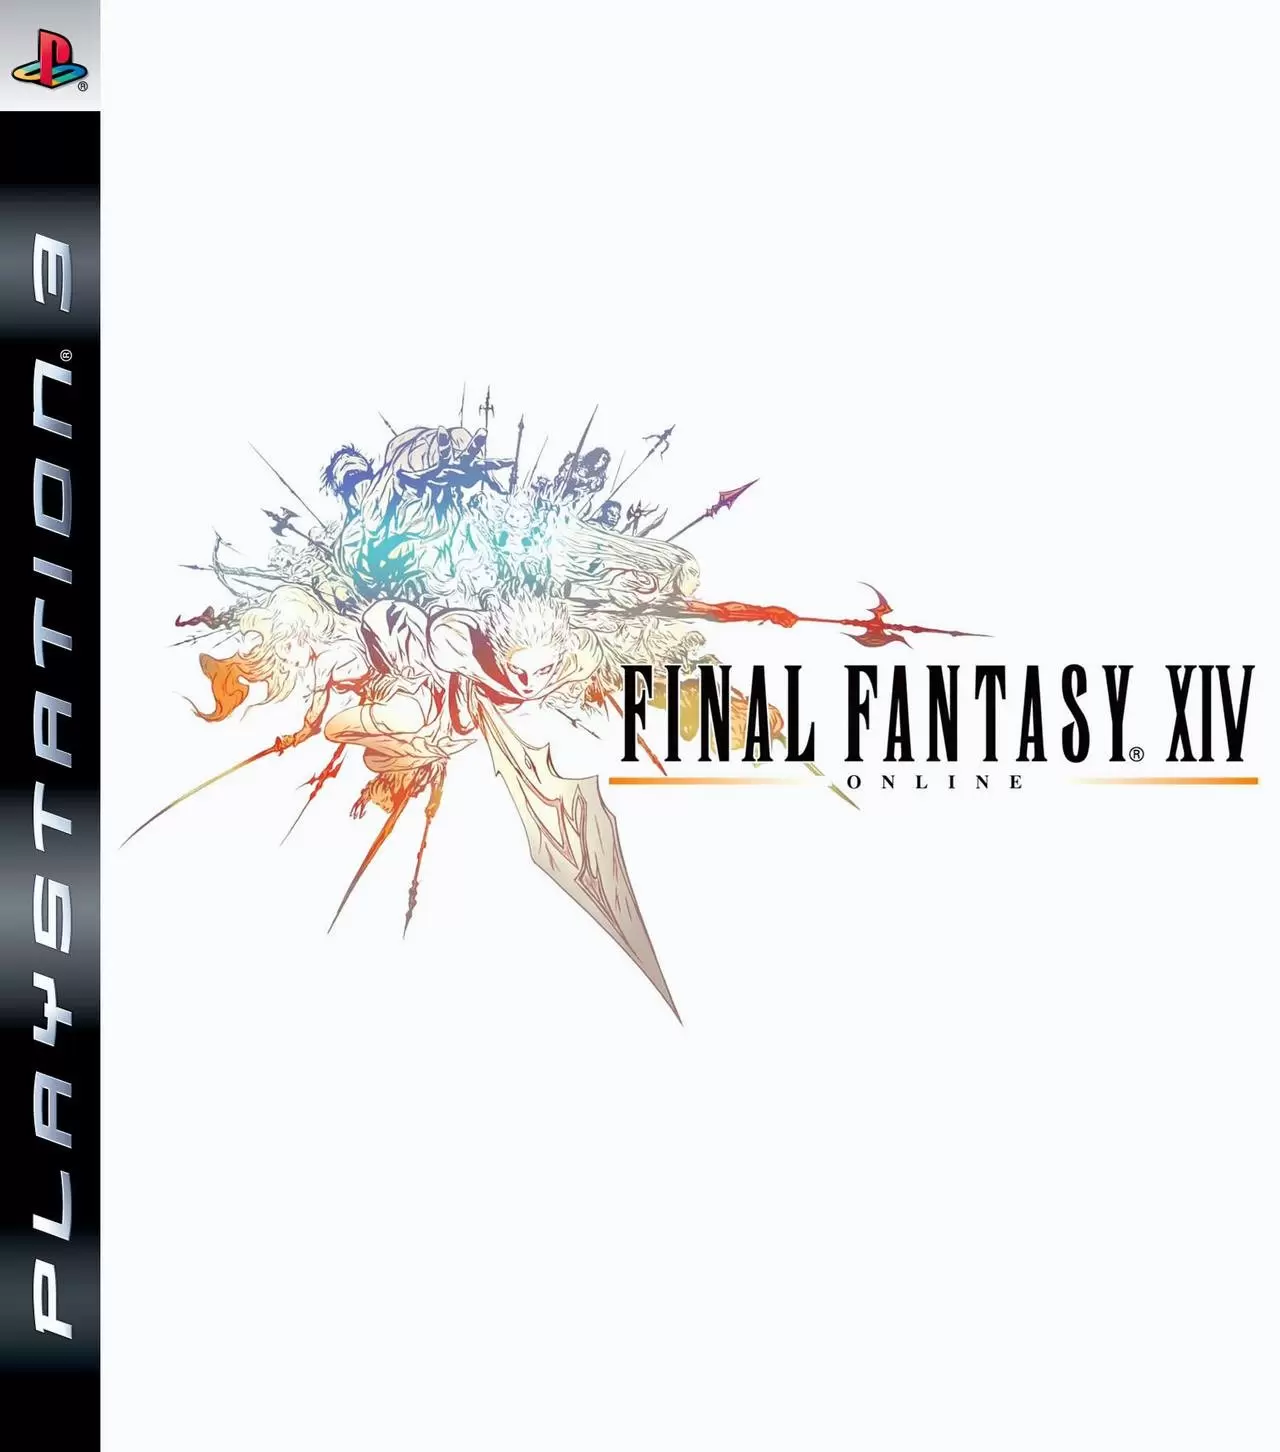 PS3 Games - Final Fantasy XIV